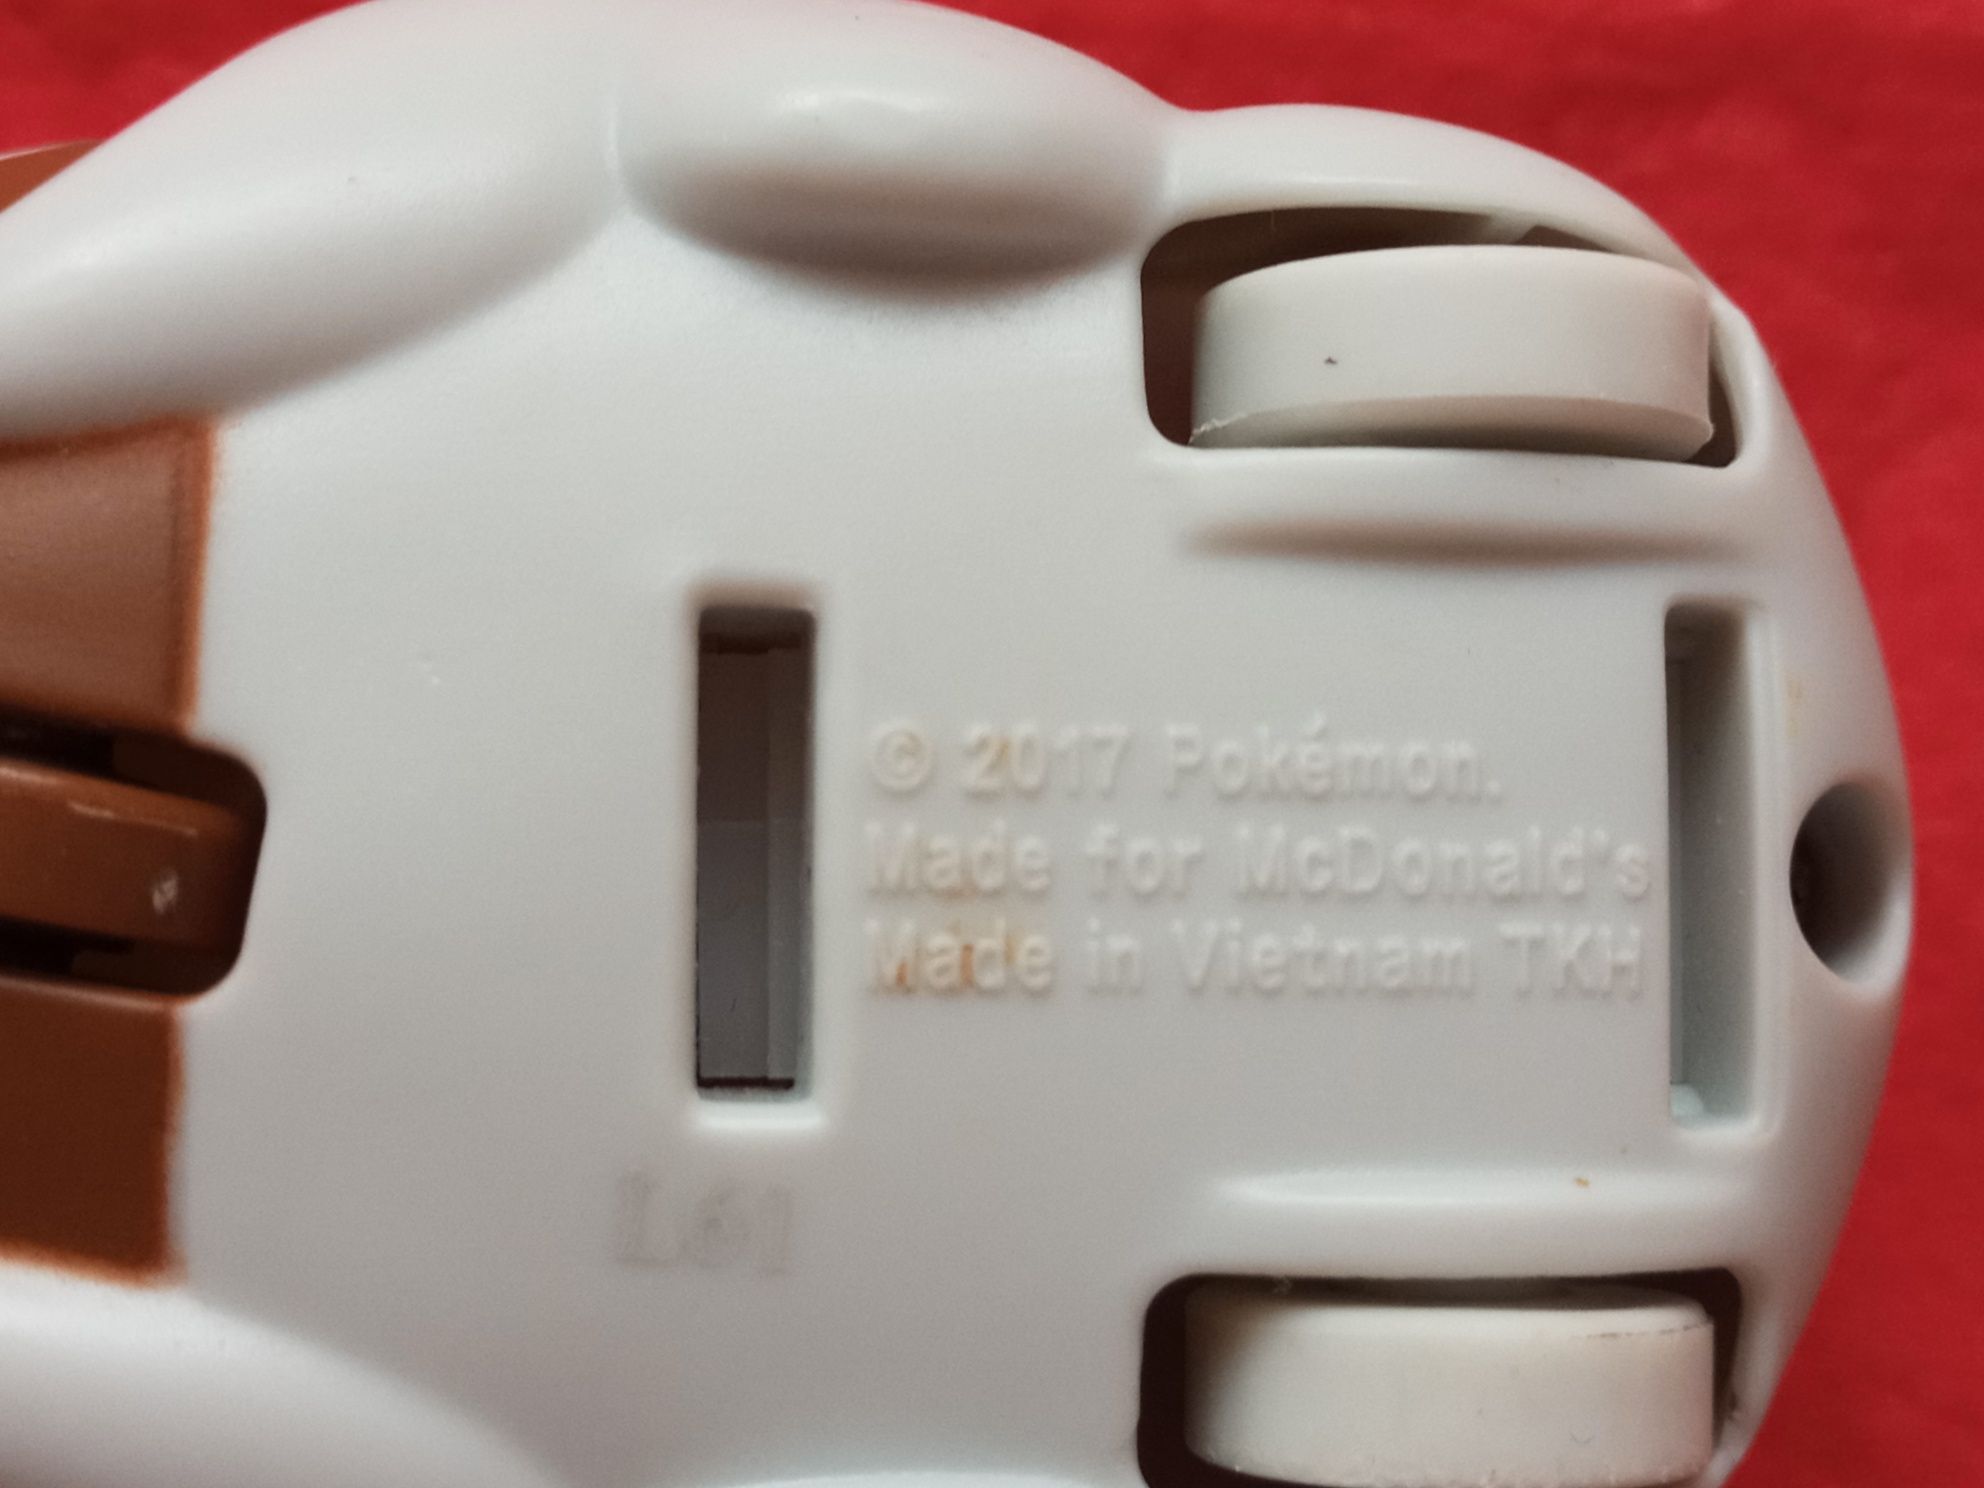 Pokemon Grubbi-seria L61 - 2017;made in Vietnam(pt.McDonald's).